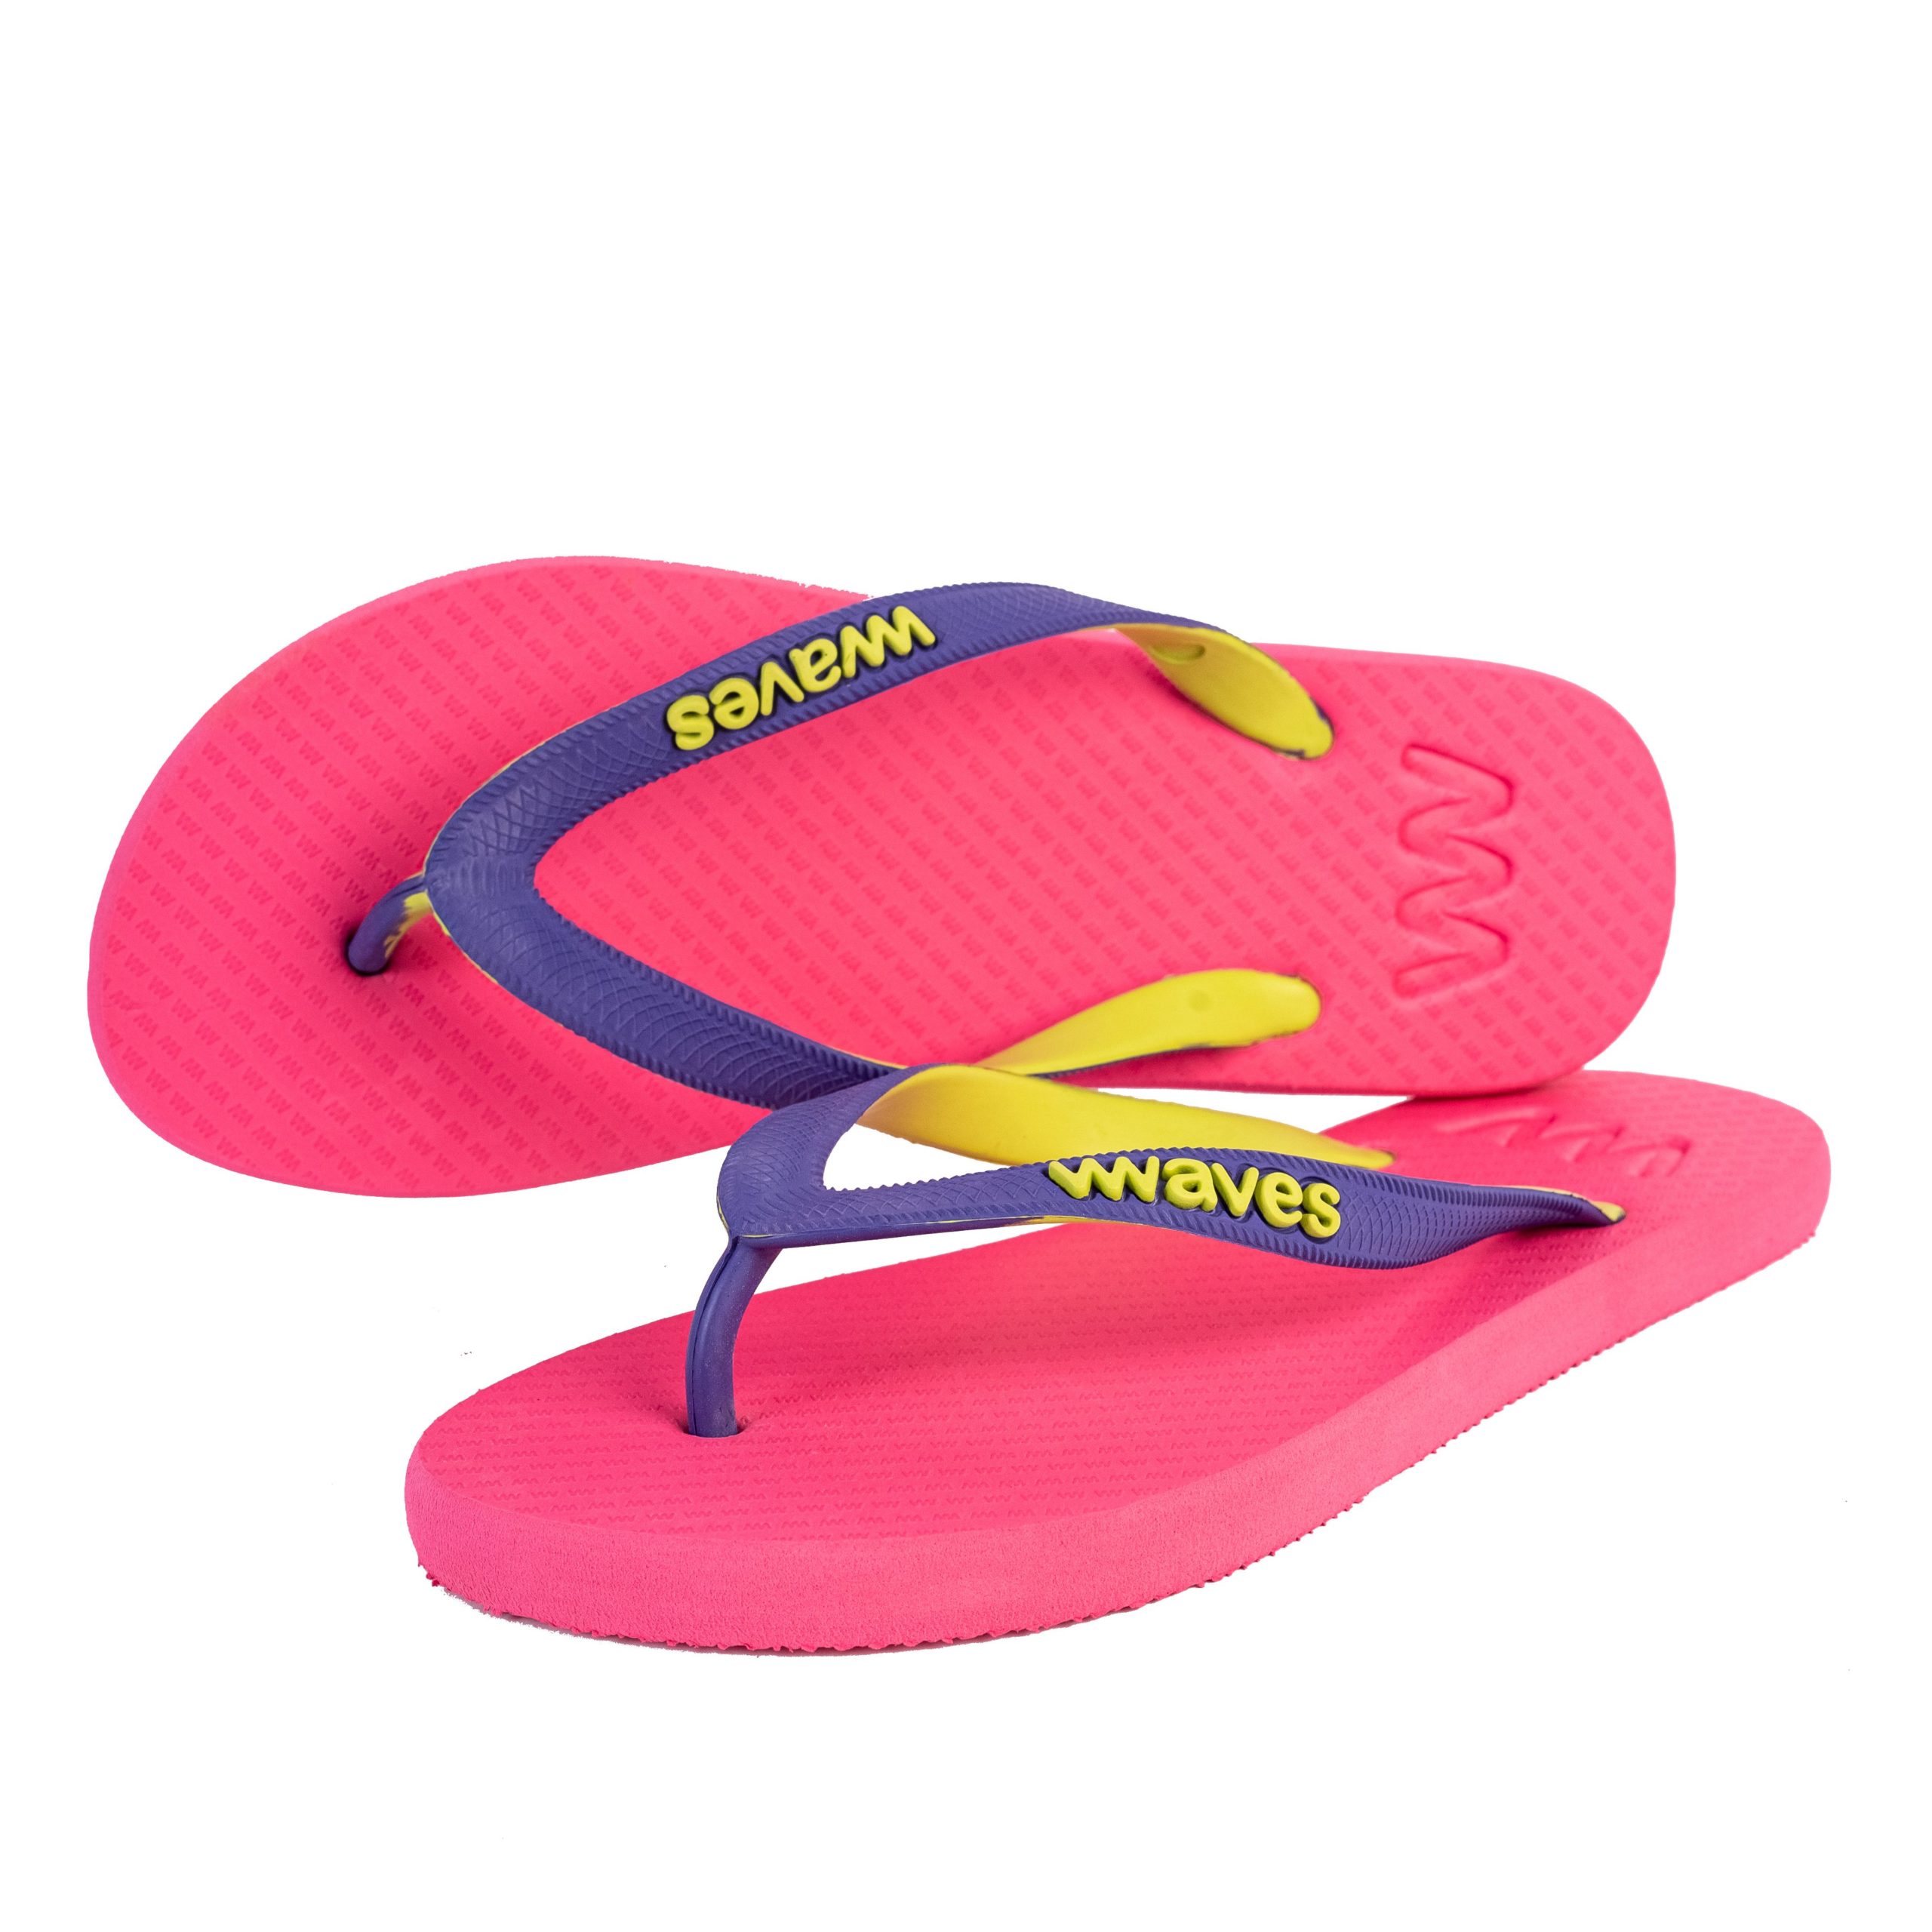 100% natural rubber flip flop – pink tri-tone - 4